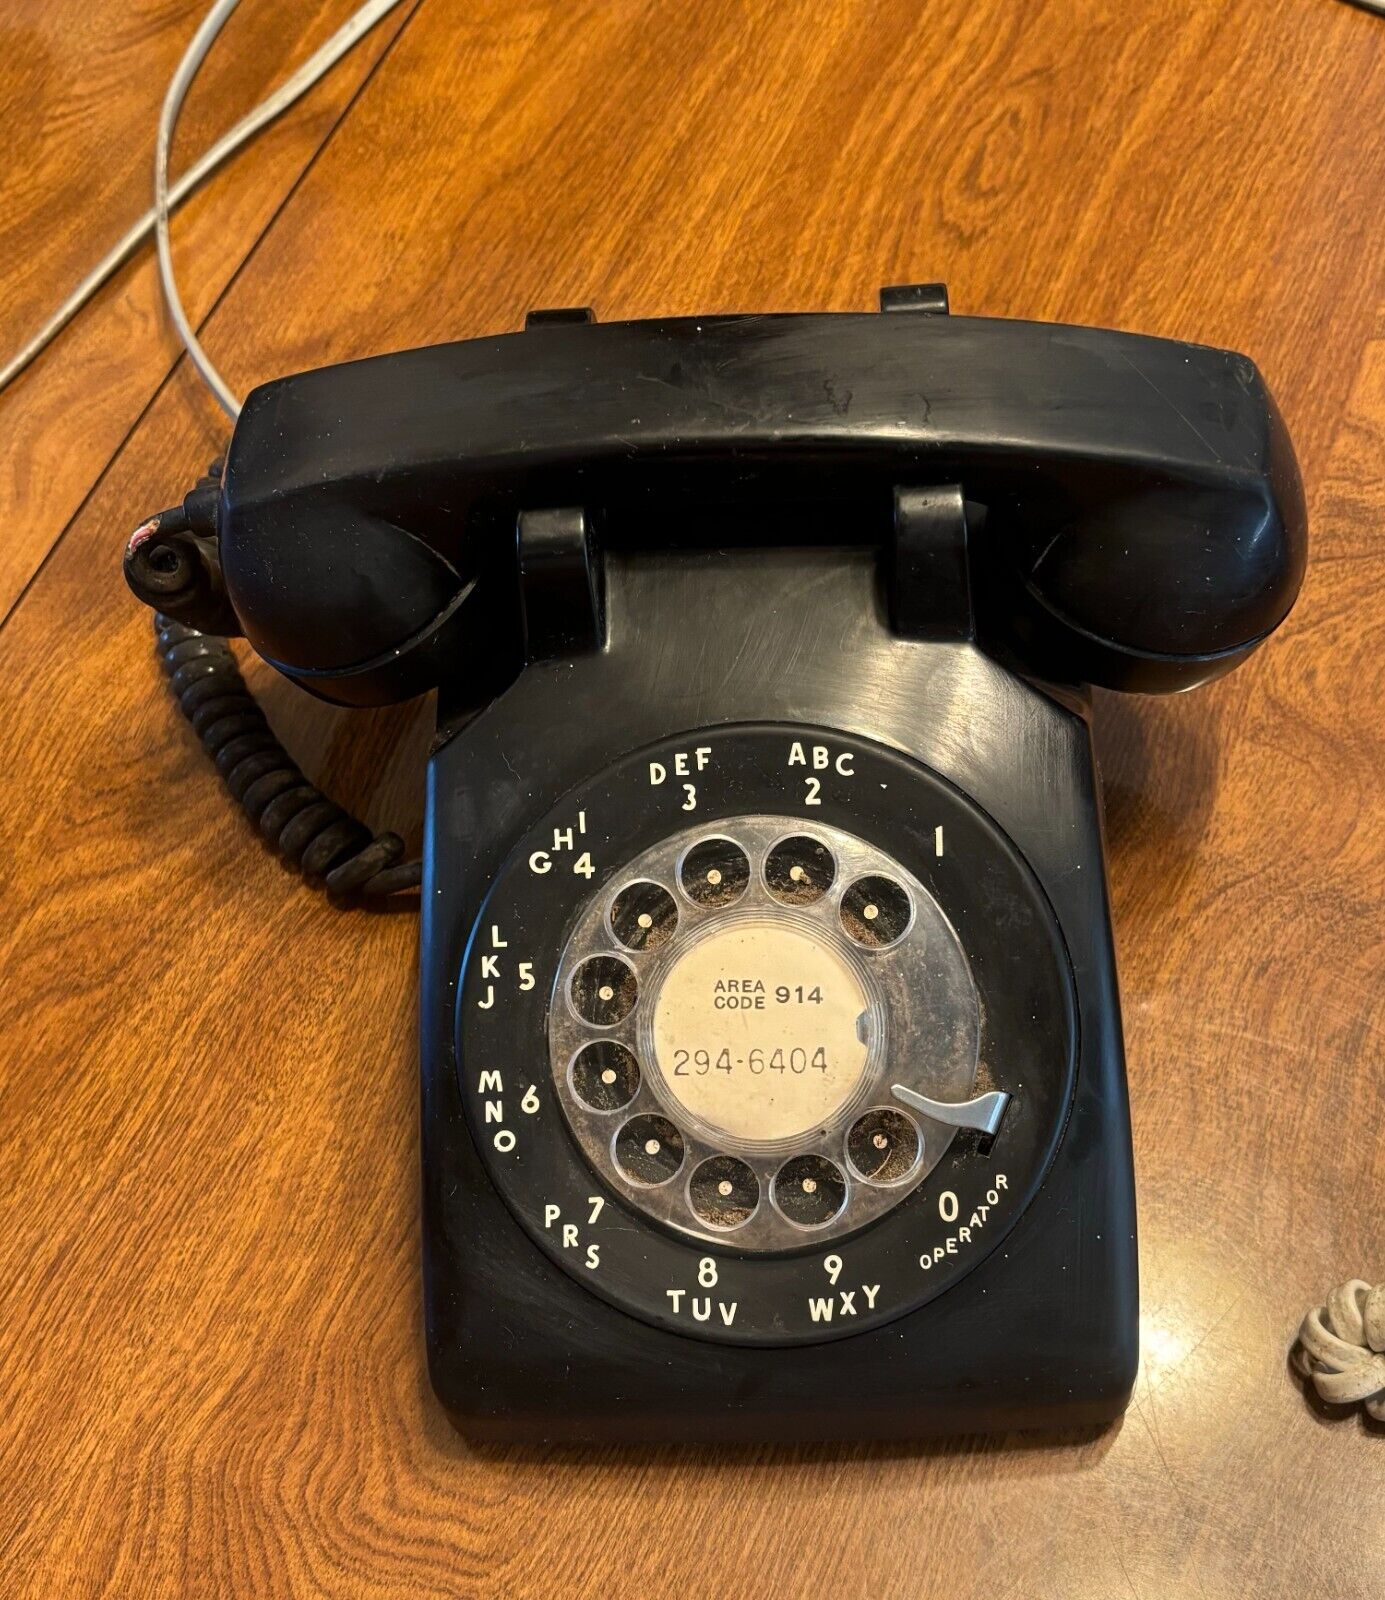 Vintage 1970's ITT black desk telephone rotary dial phone